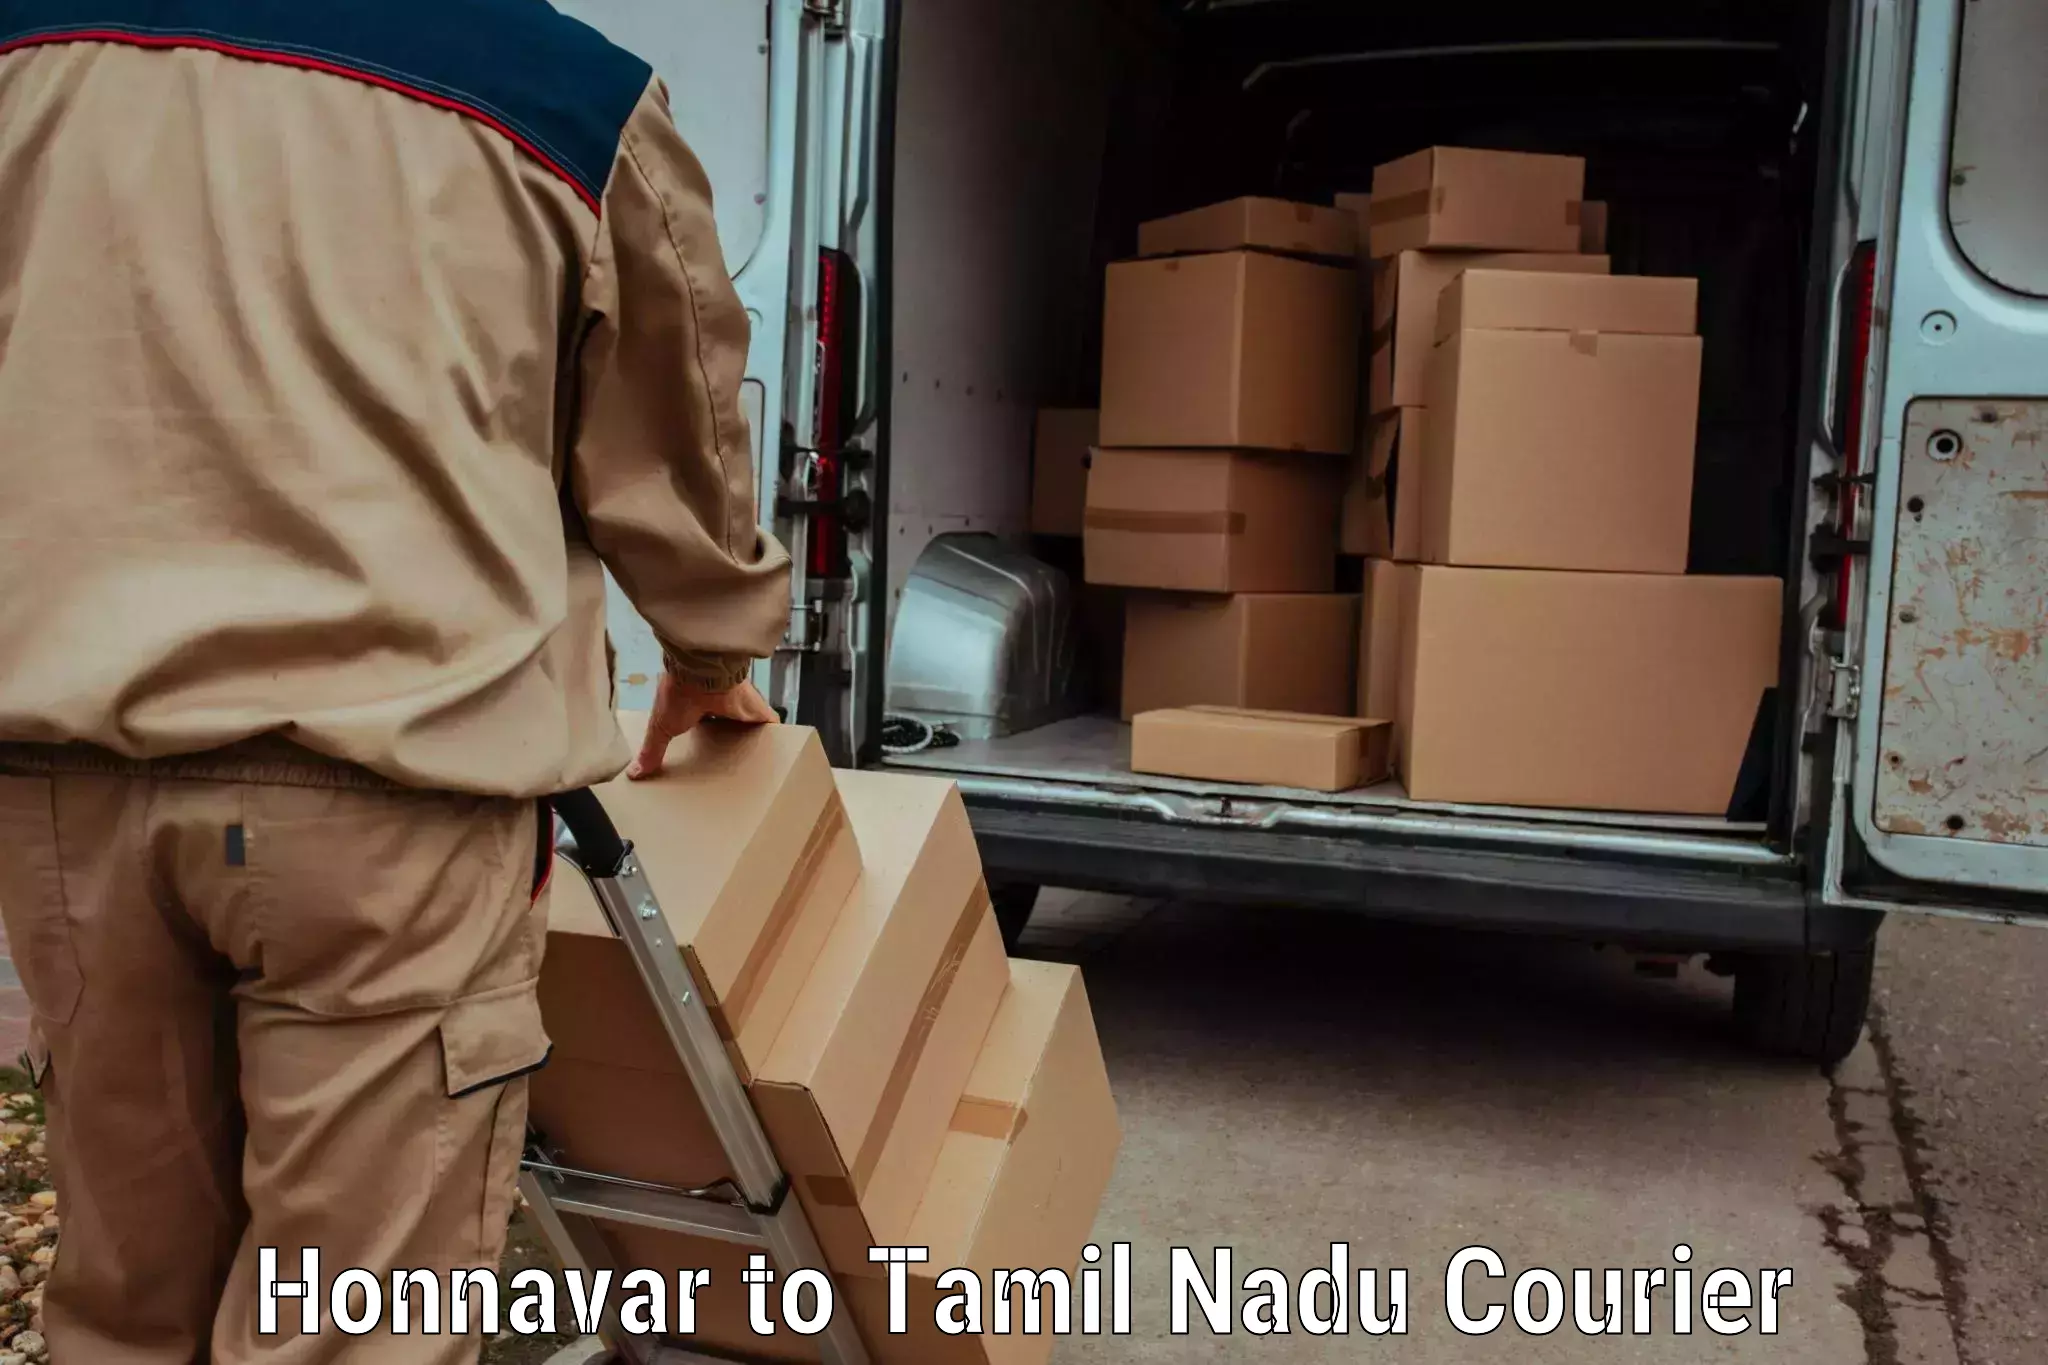 Courier service partnerships Honnavar to The Gandhigram Rural Institute